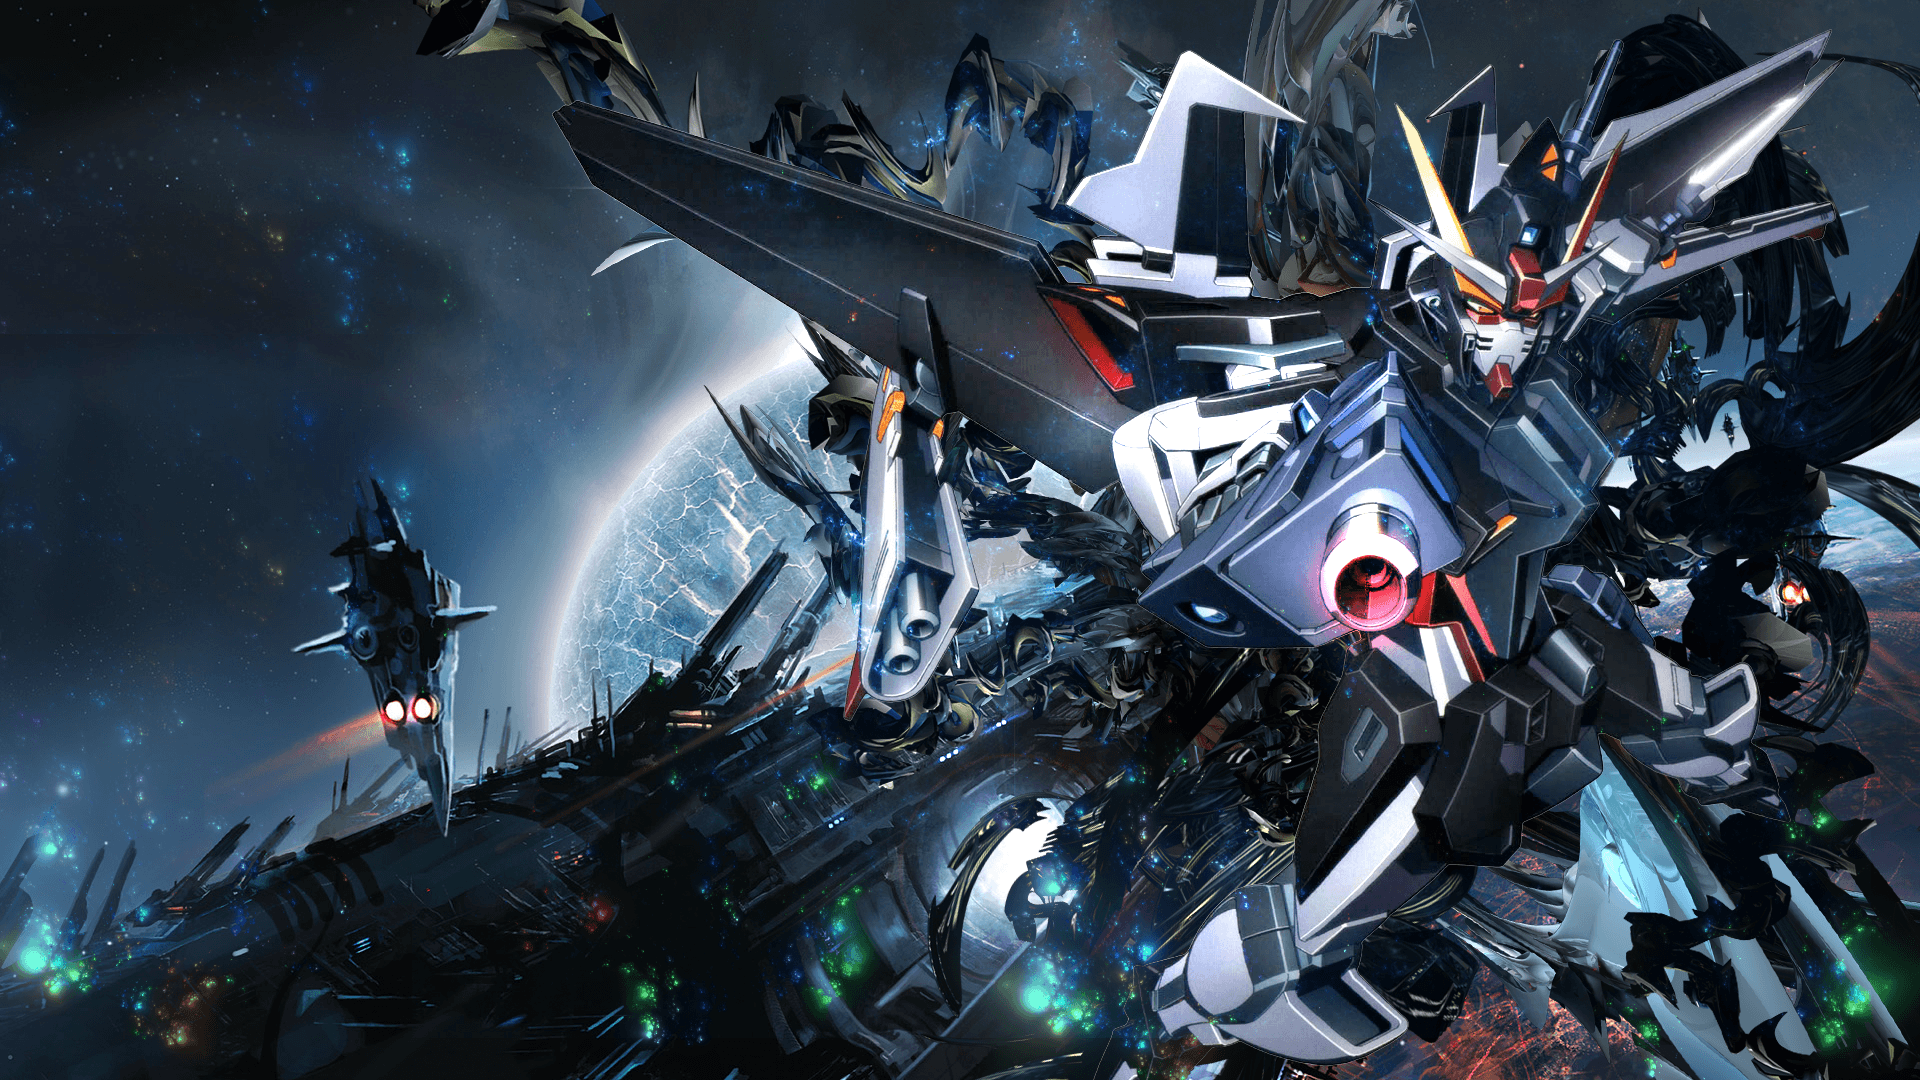 Wallpaper.wiki Gundam Unicorn 1080p Anime Background PIC WPD008544